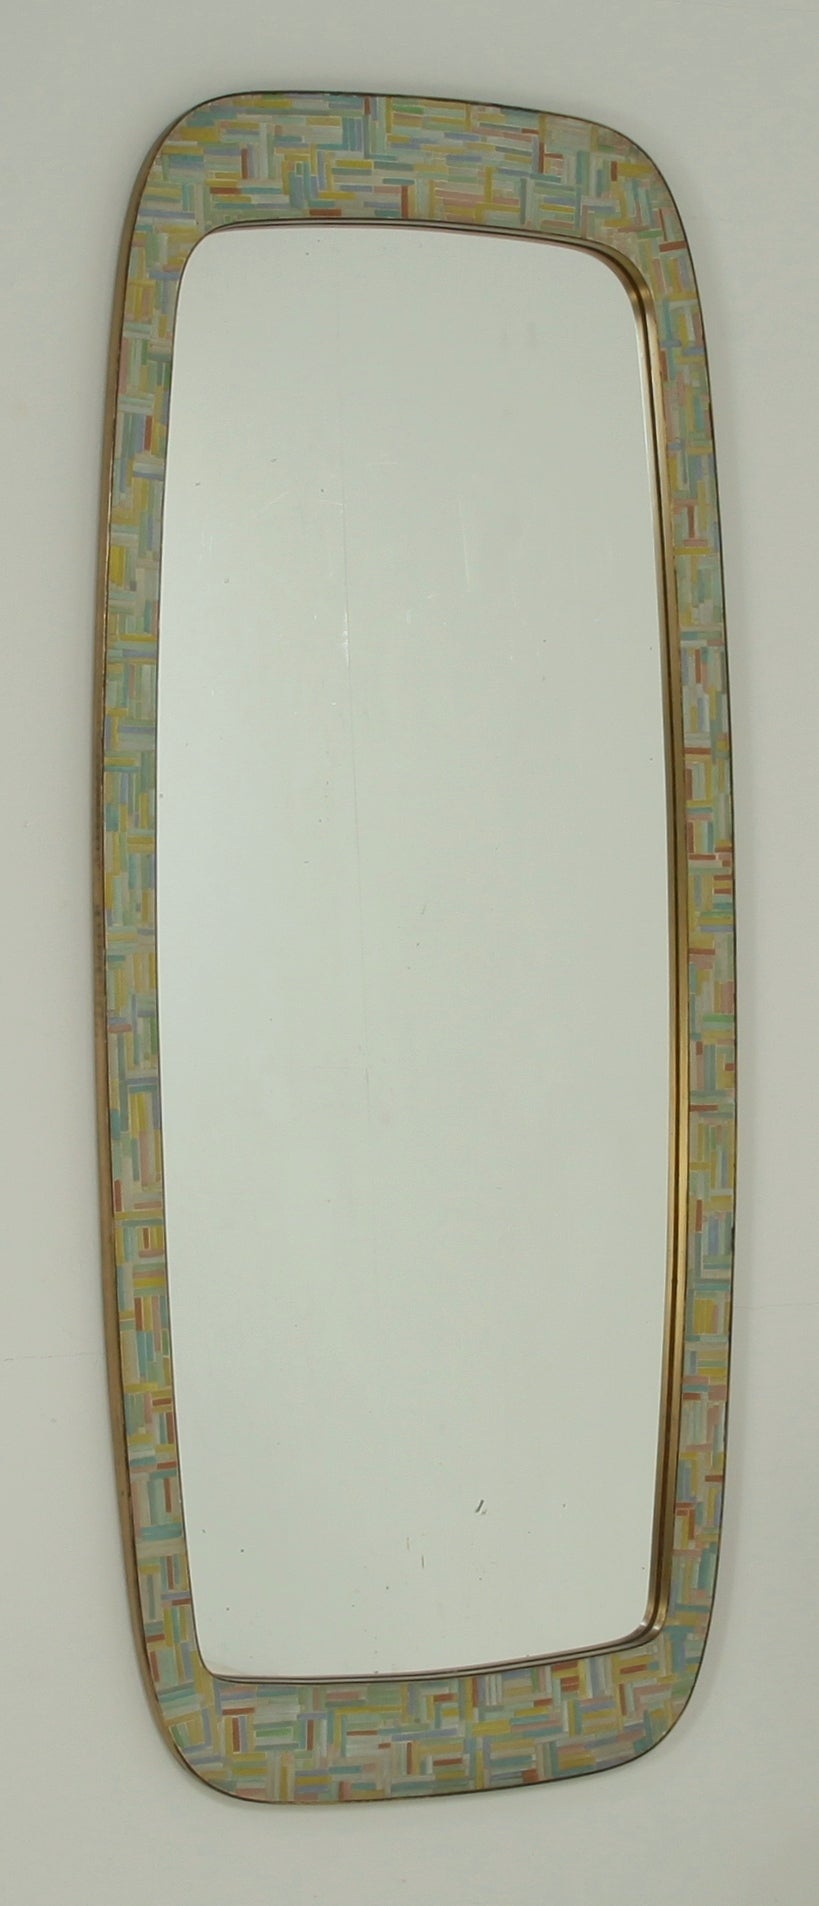 1950s Waldemar Schuster brass and glass Mosaik hallway or dressing mirror